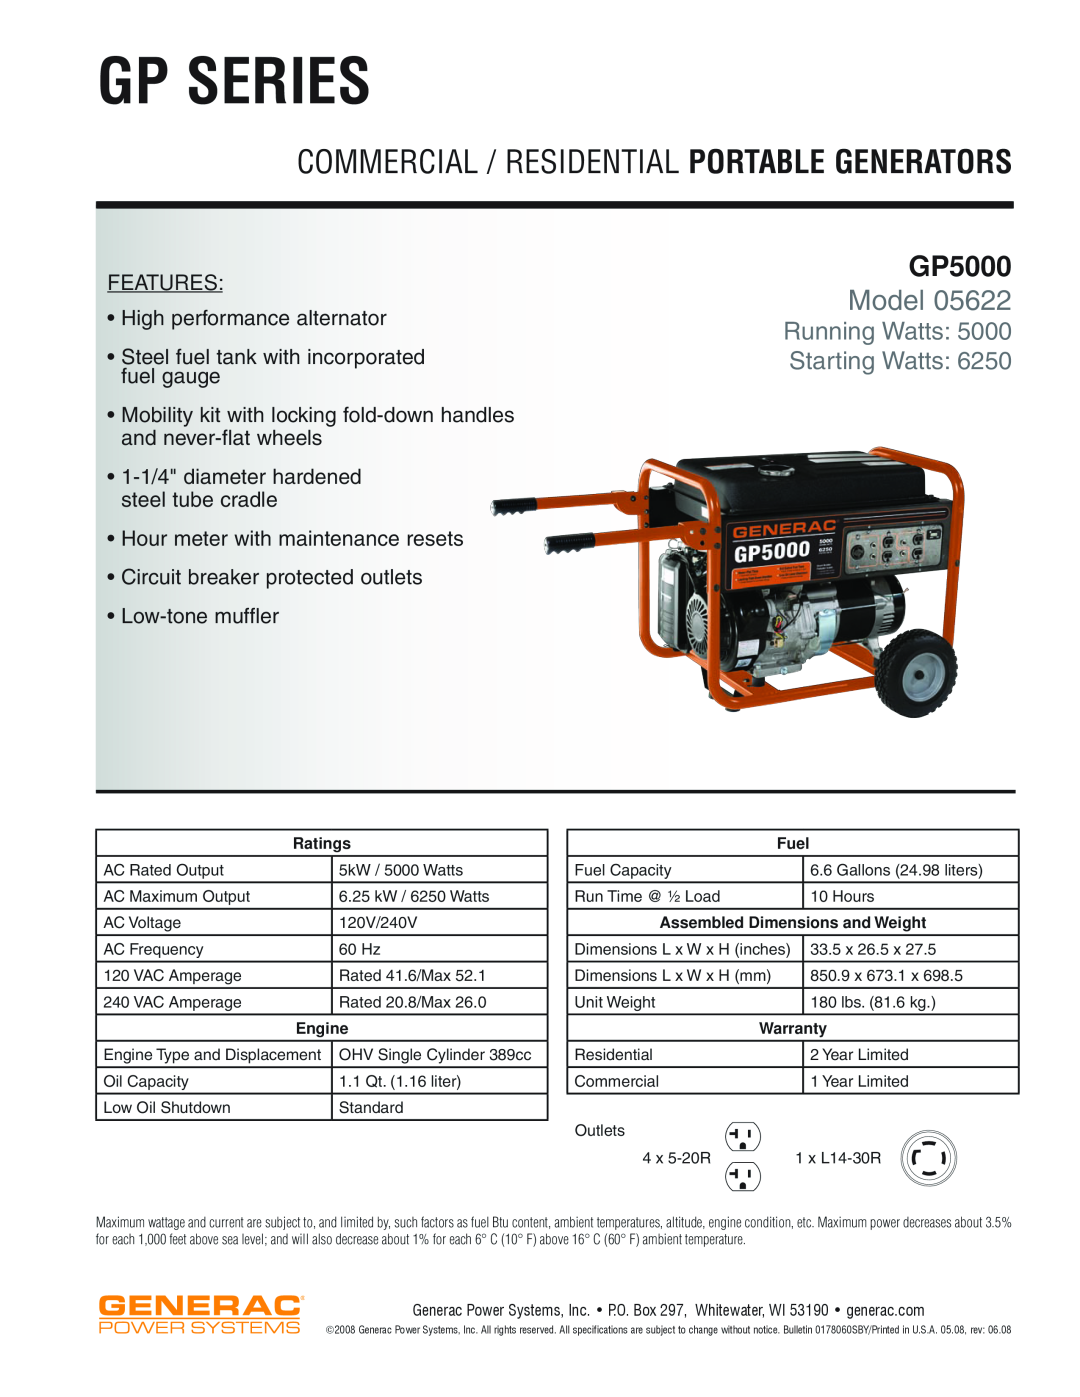 Generac Power Systems 05622 dimensions Gp Series, Commercial / Residential Portable Generators, GP5000, Model, Ratings 